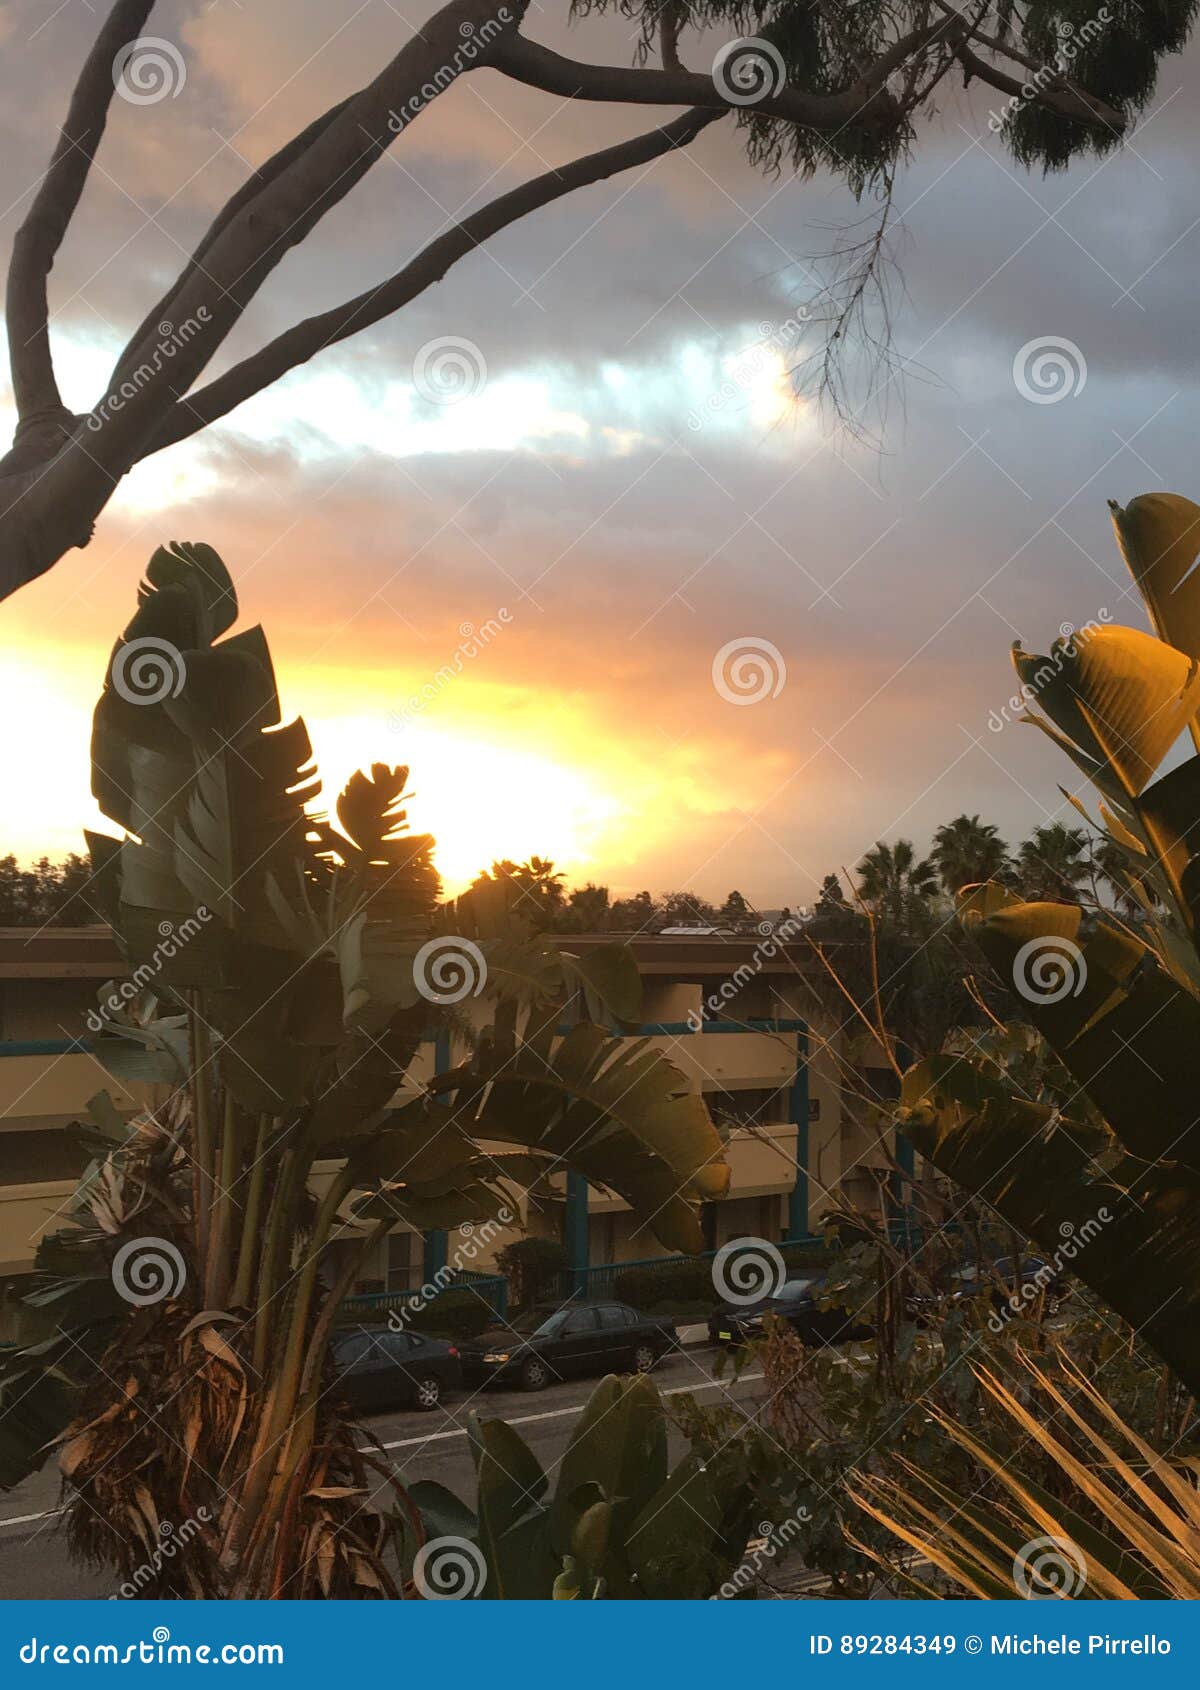 sunrise in sandiego, palm trees